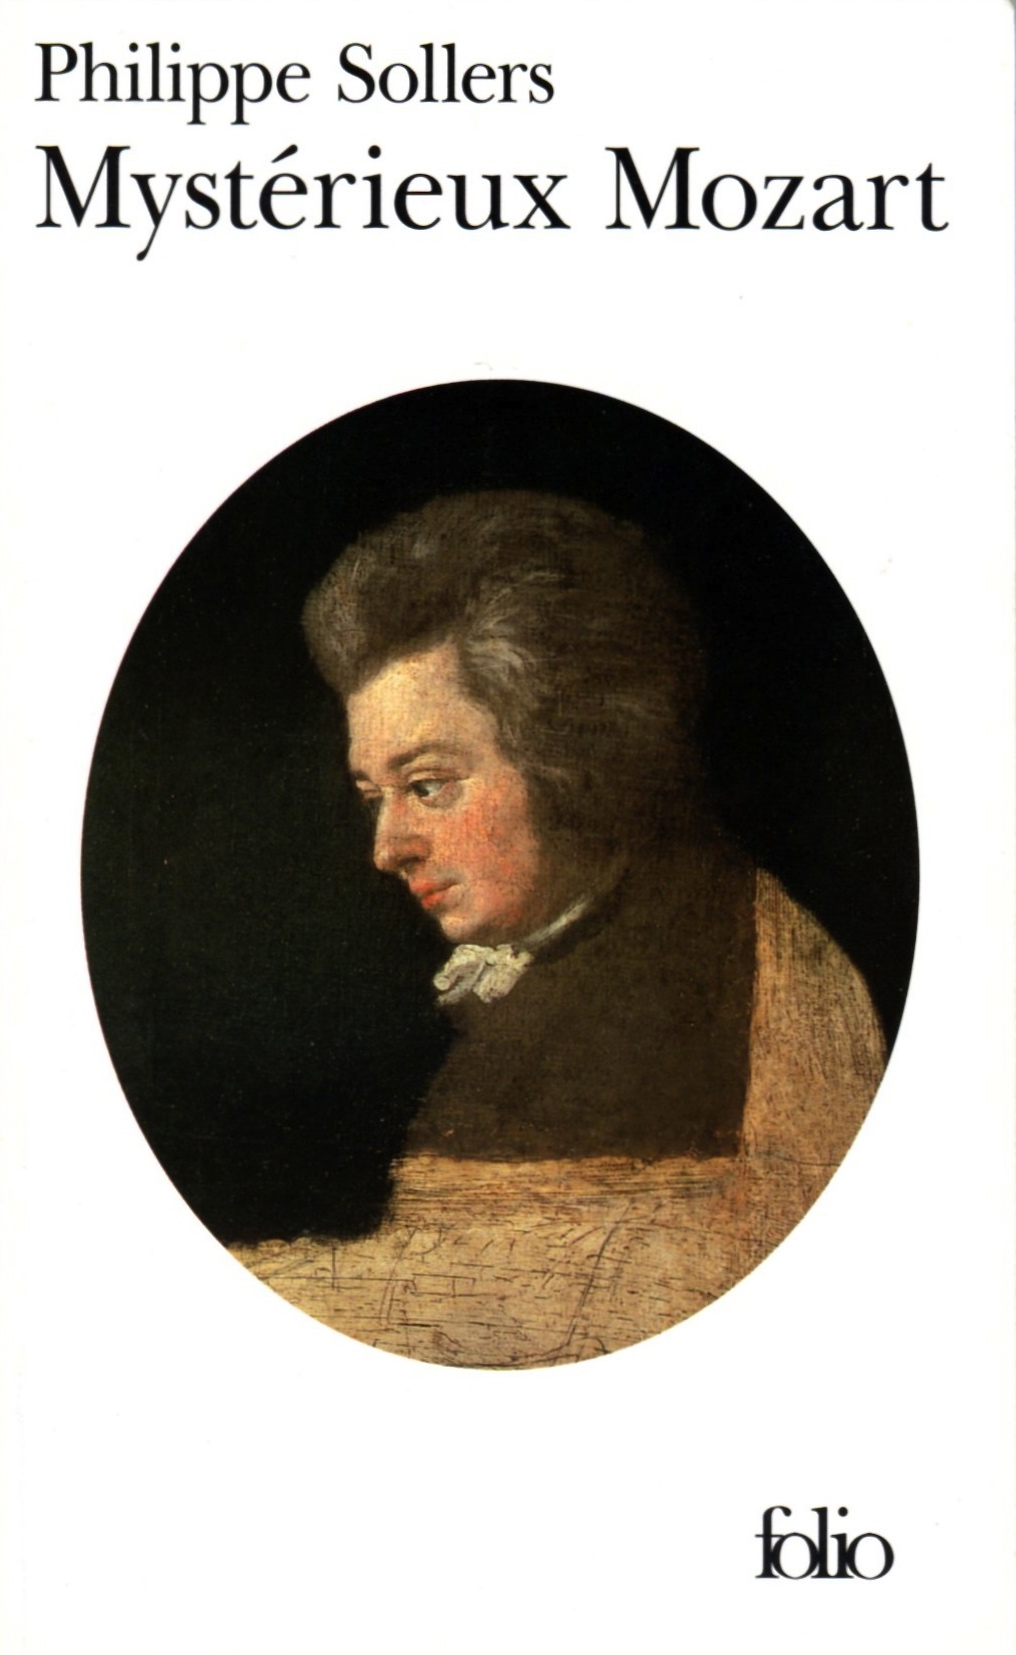 Philippe Sollers, Mystérieux Mozart, Folio n°3845